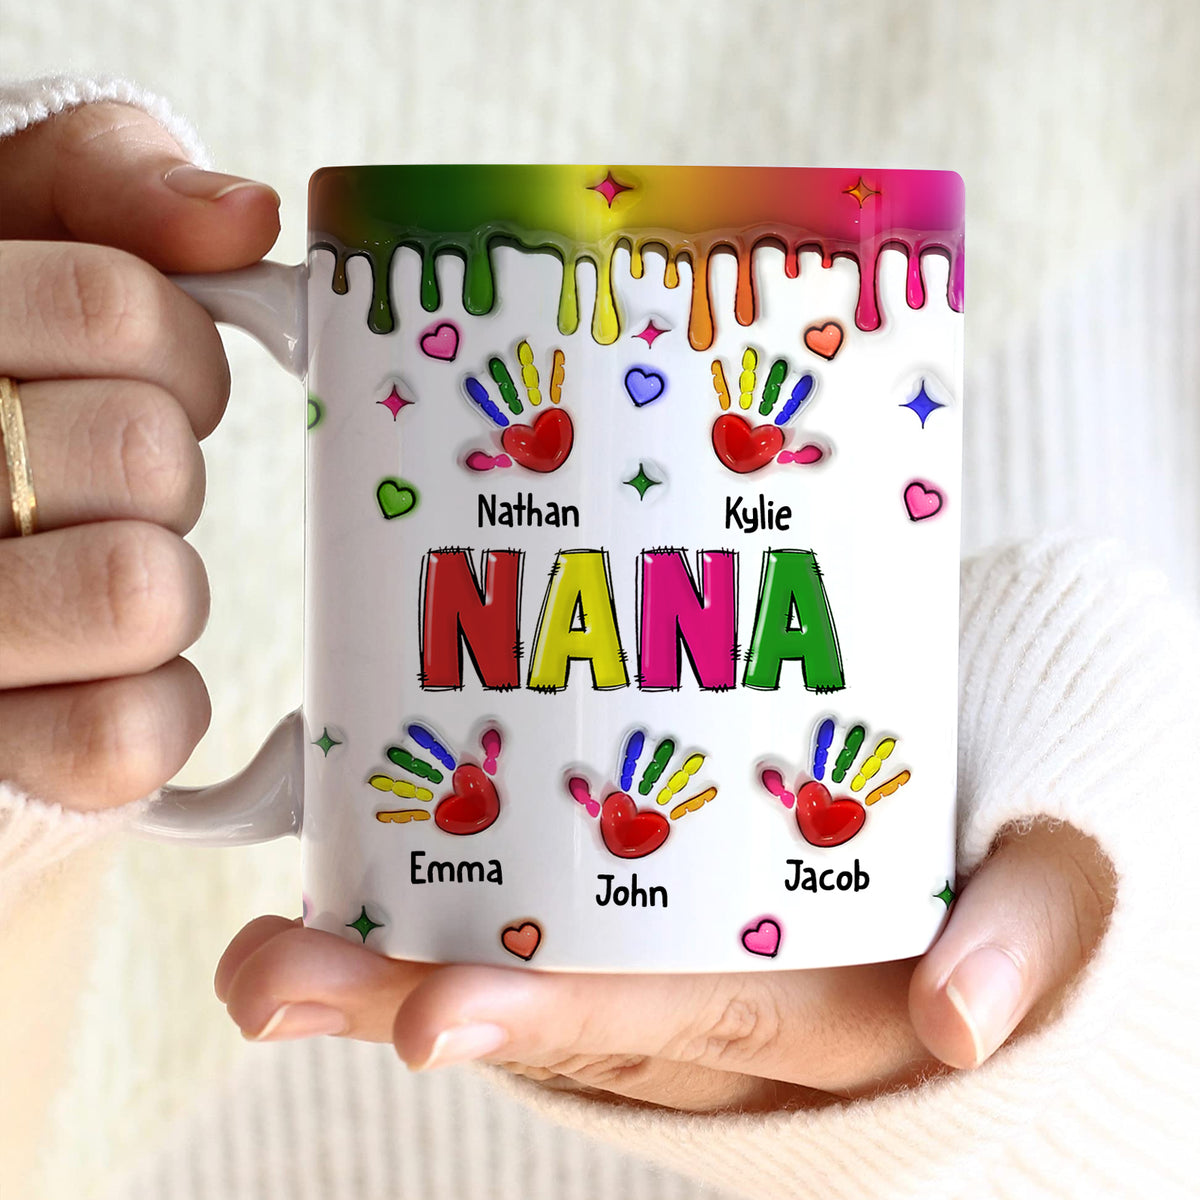 Colorful Grandma Mom Handprint Grandkids 3D Inflated Effect Personalized White Edge-To-Edge Mug LPL05APR24CT1